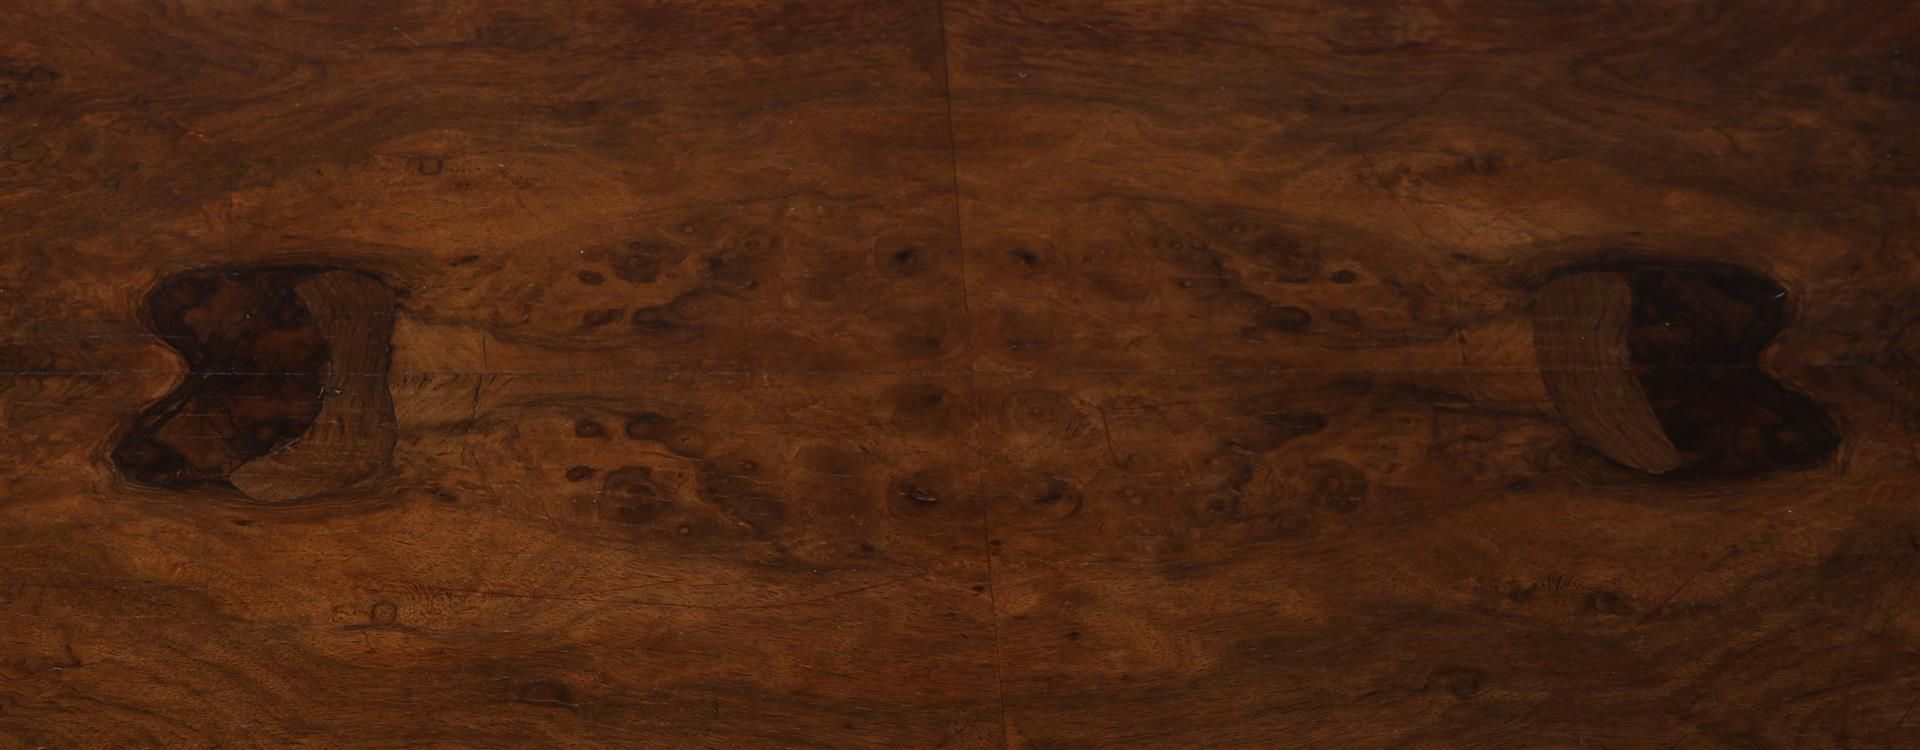 Burr walnut veneer on oak 7-drawer desk - Image 2 of 2